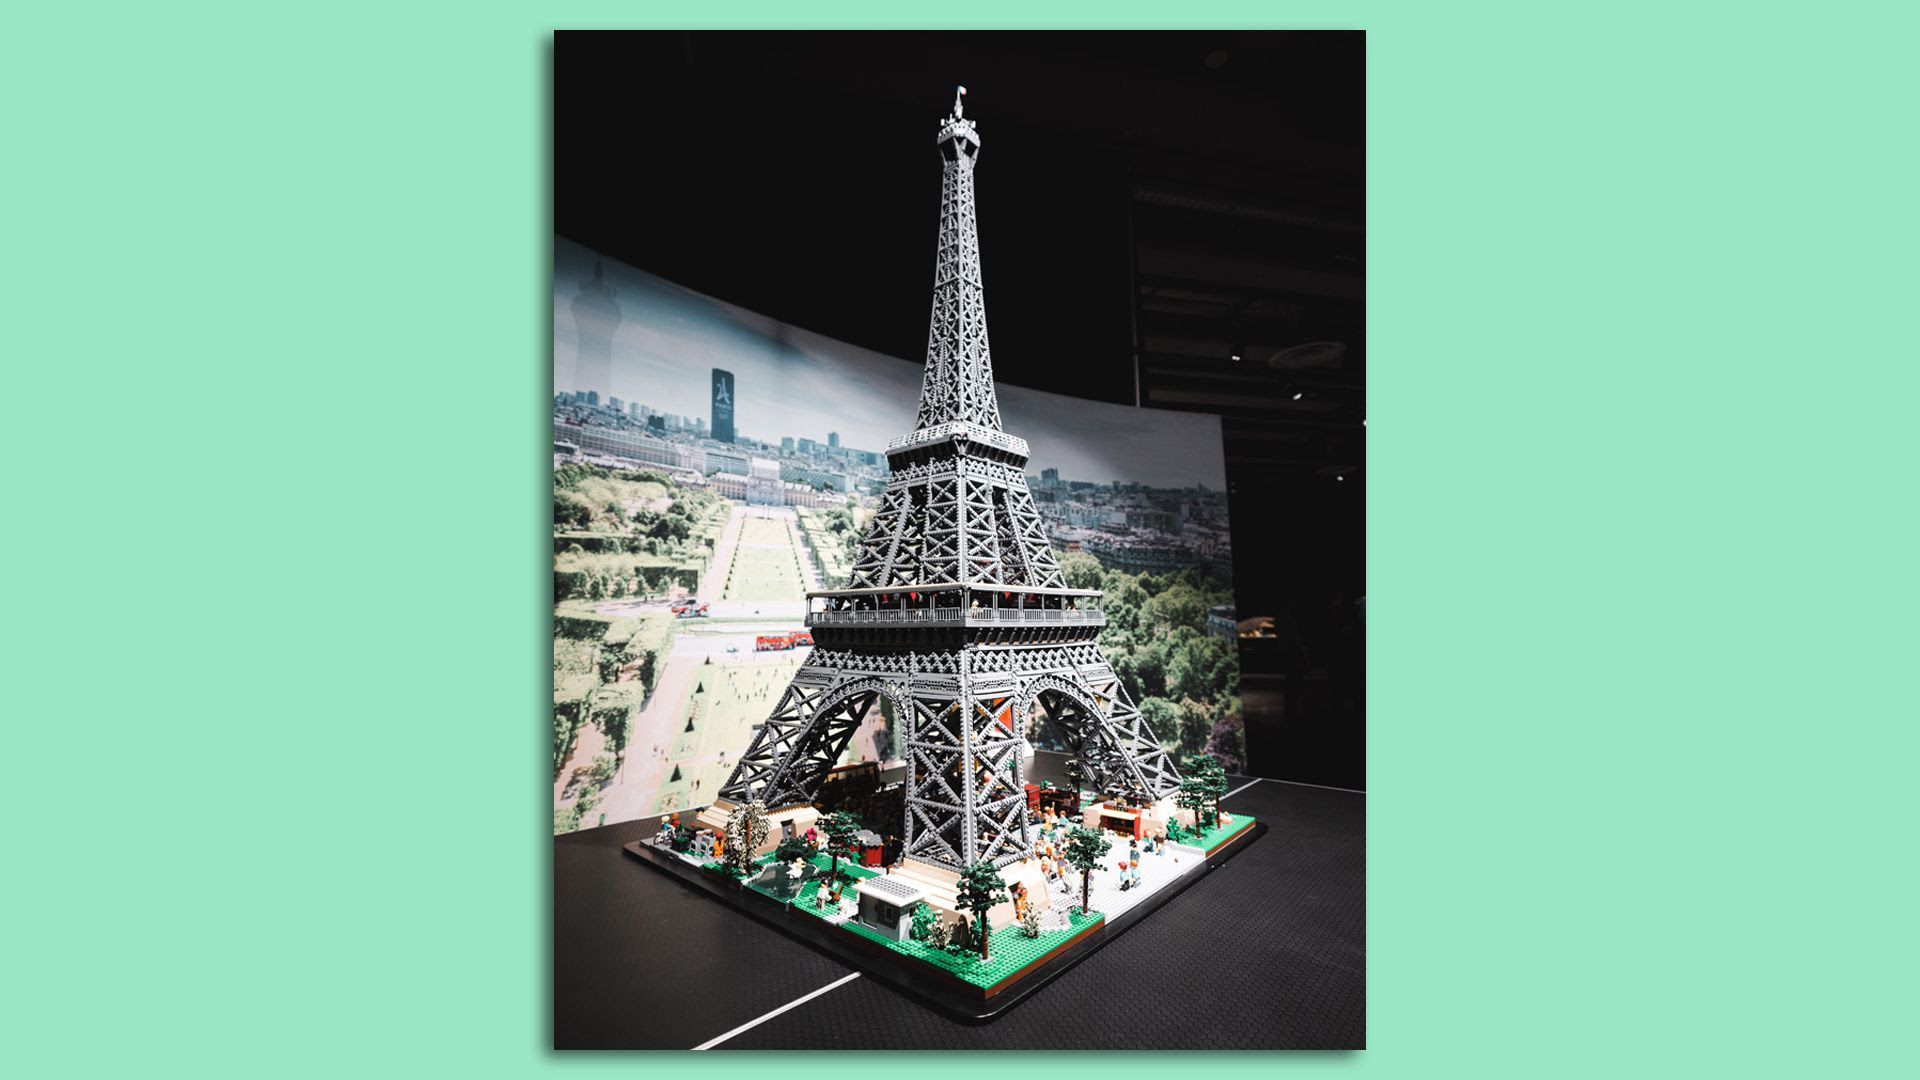 An Eiffel Tower made of 62,000 Lego bricks